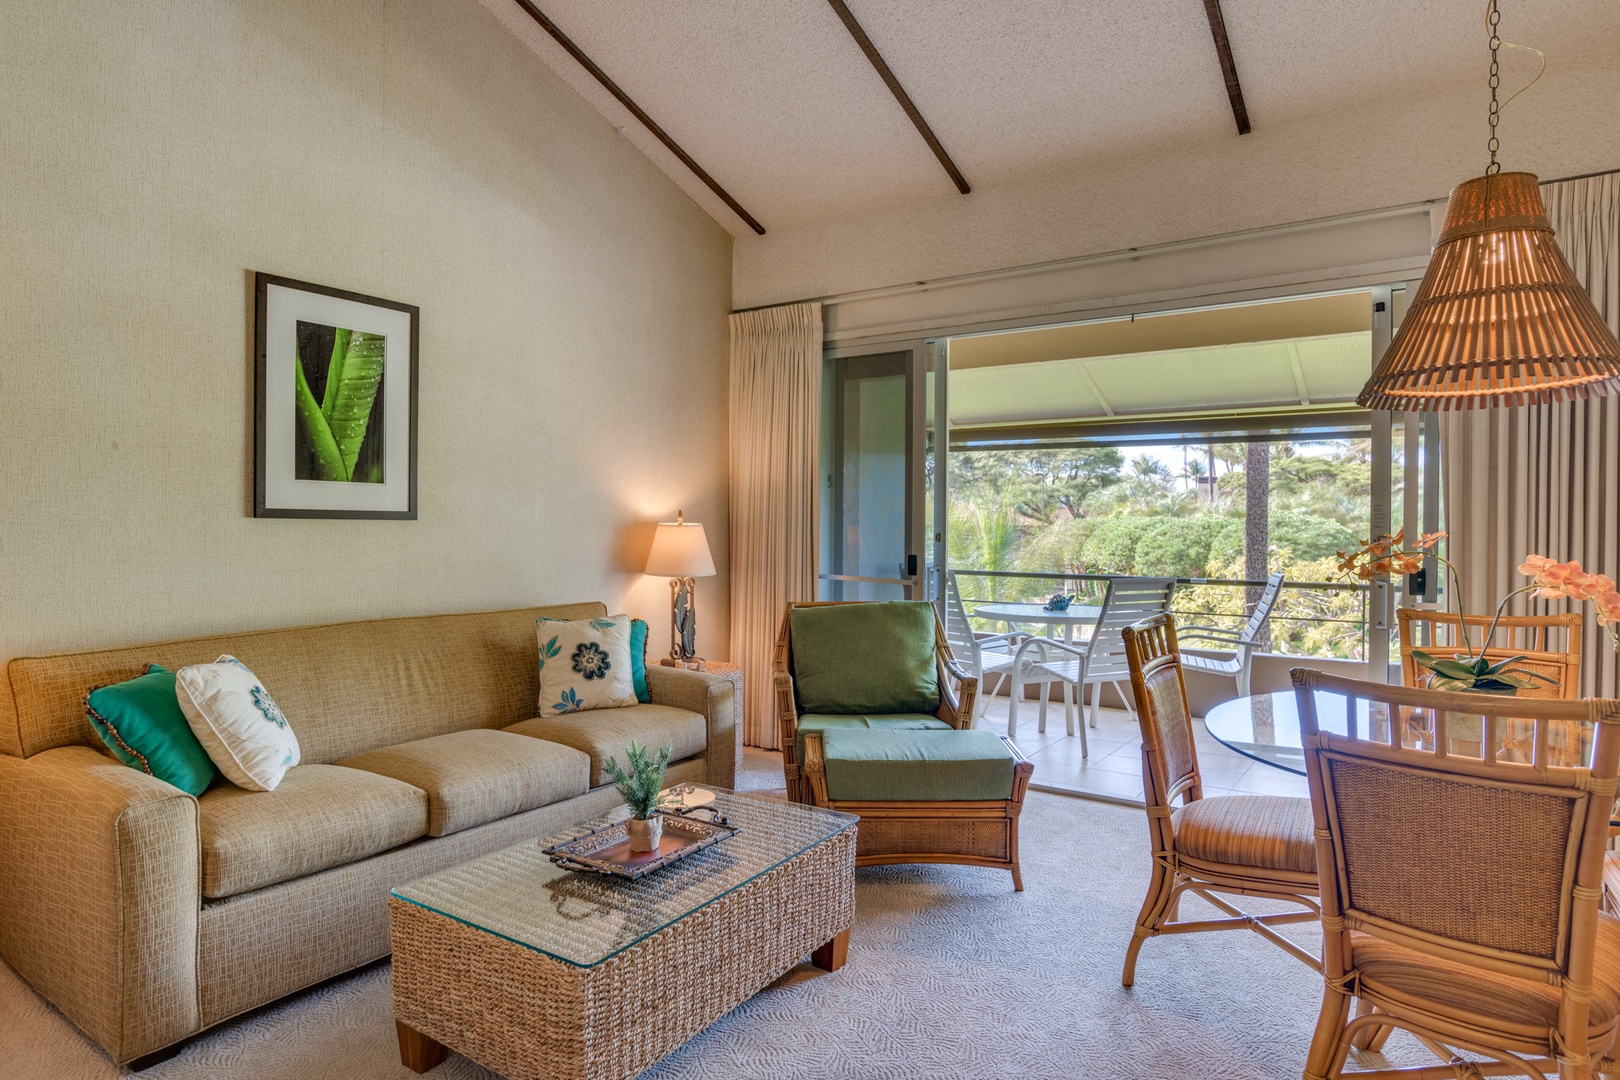 Lahaina Vacation Rentals, Maui Kaanapali Villas B225 - Queen sleeper sofa for a maximum of 4 guests